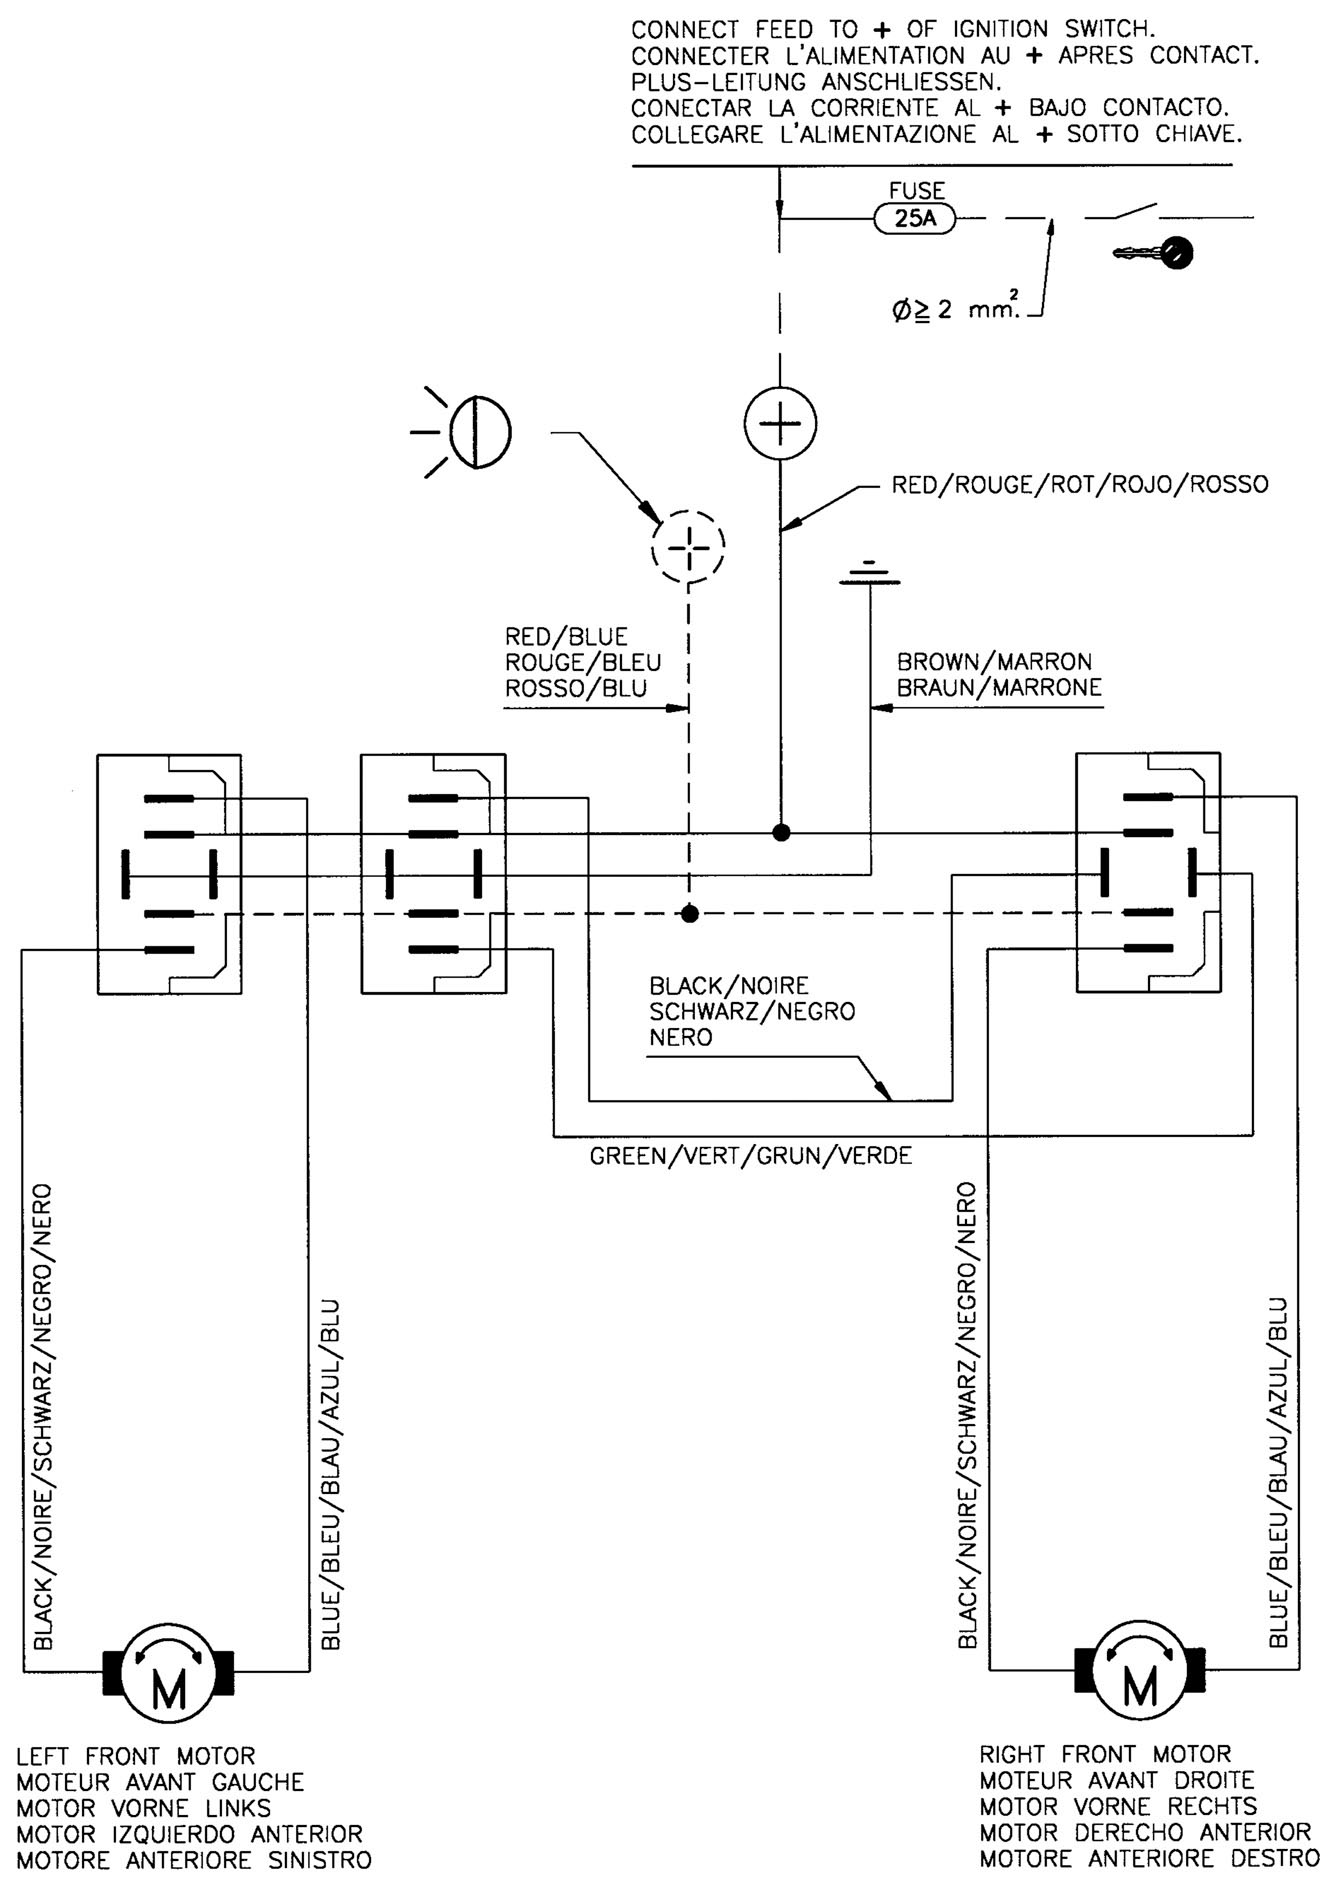 Electric Life Power Window Wiring Diagram - Database - Wiring Diagram